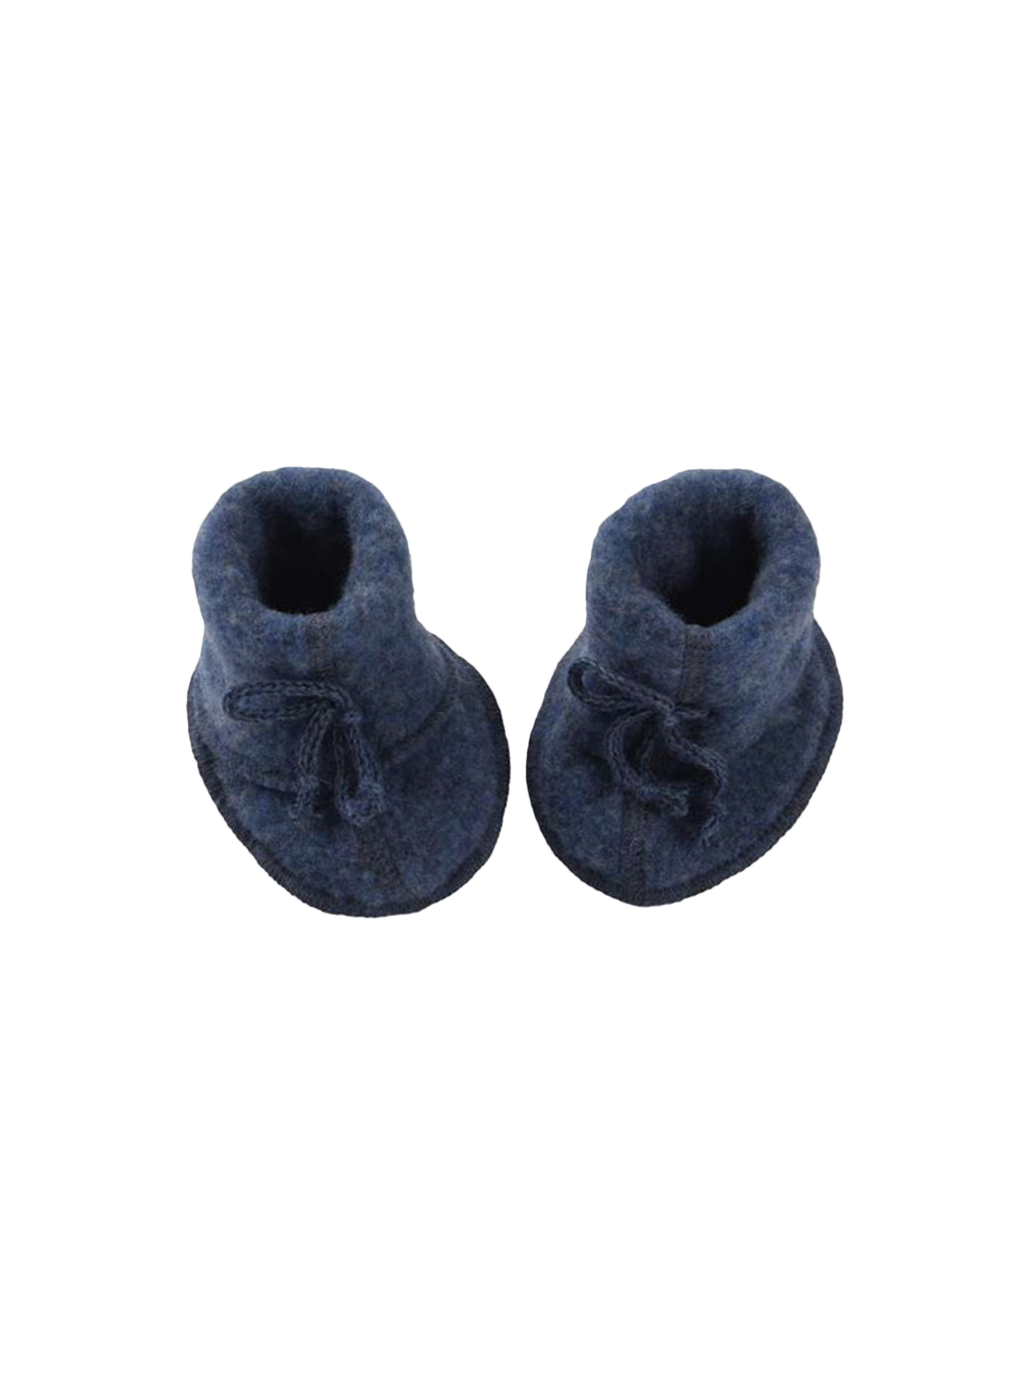 warm Merino wool booties